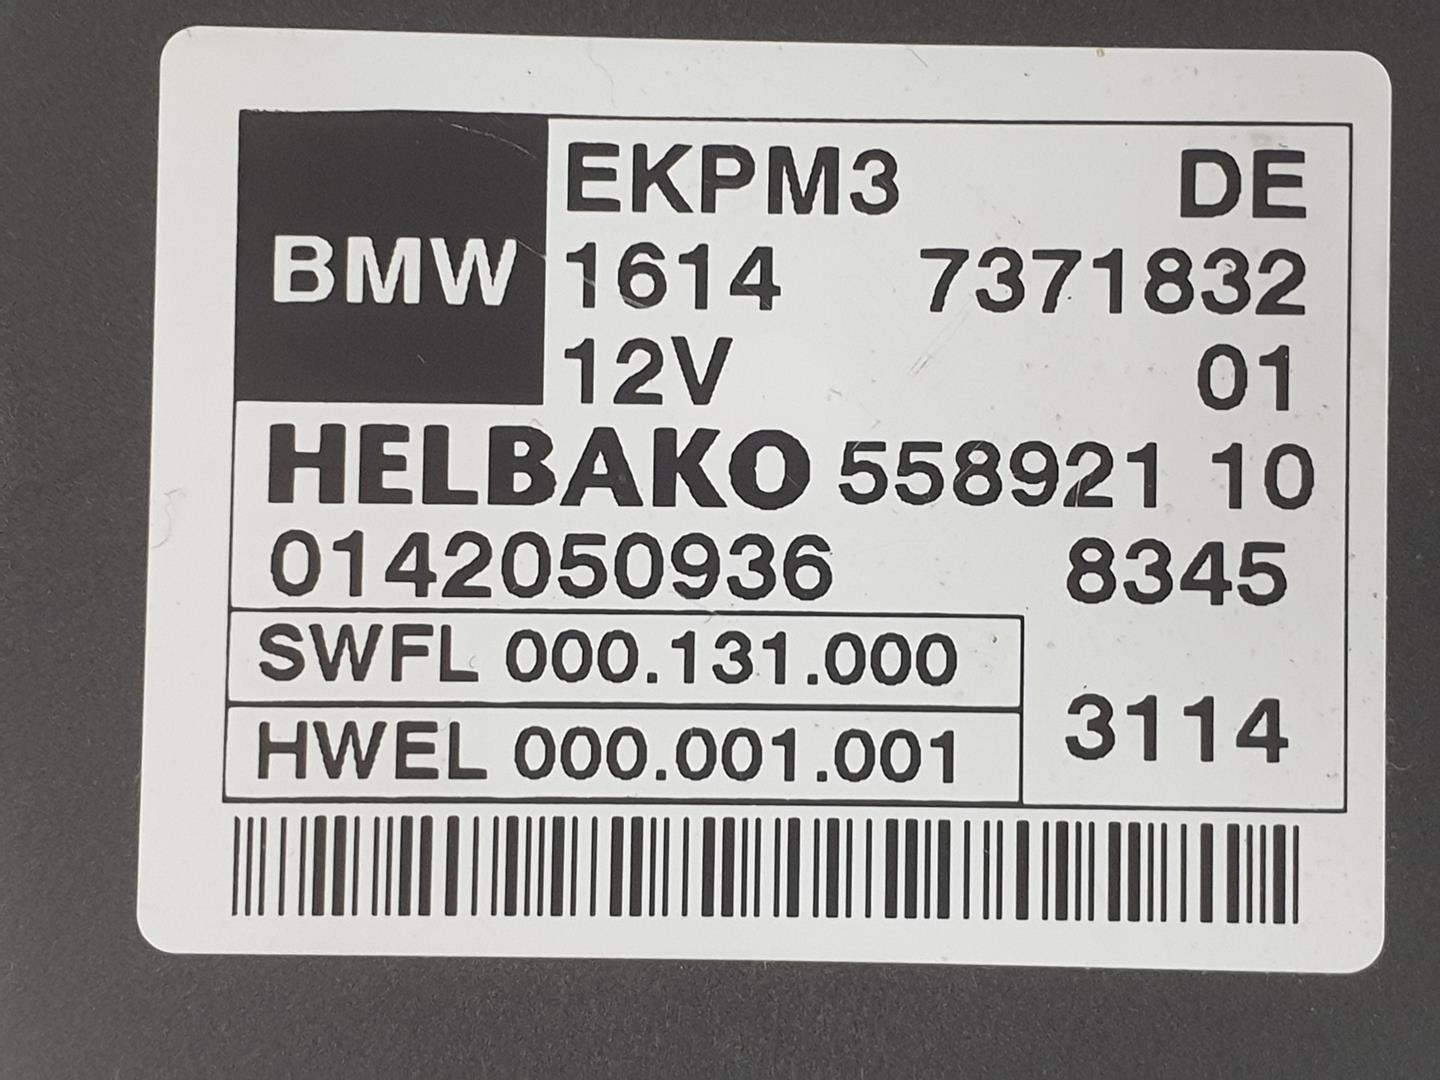 BMW 1 Series F20/F21 (2011-2020) Other Control Units 16147371832, 16147411596 19898541